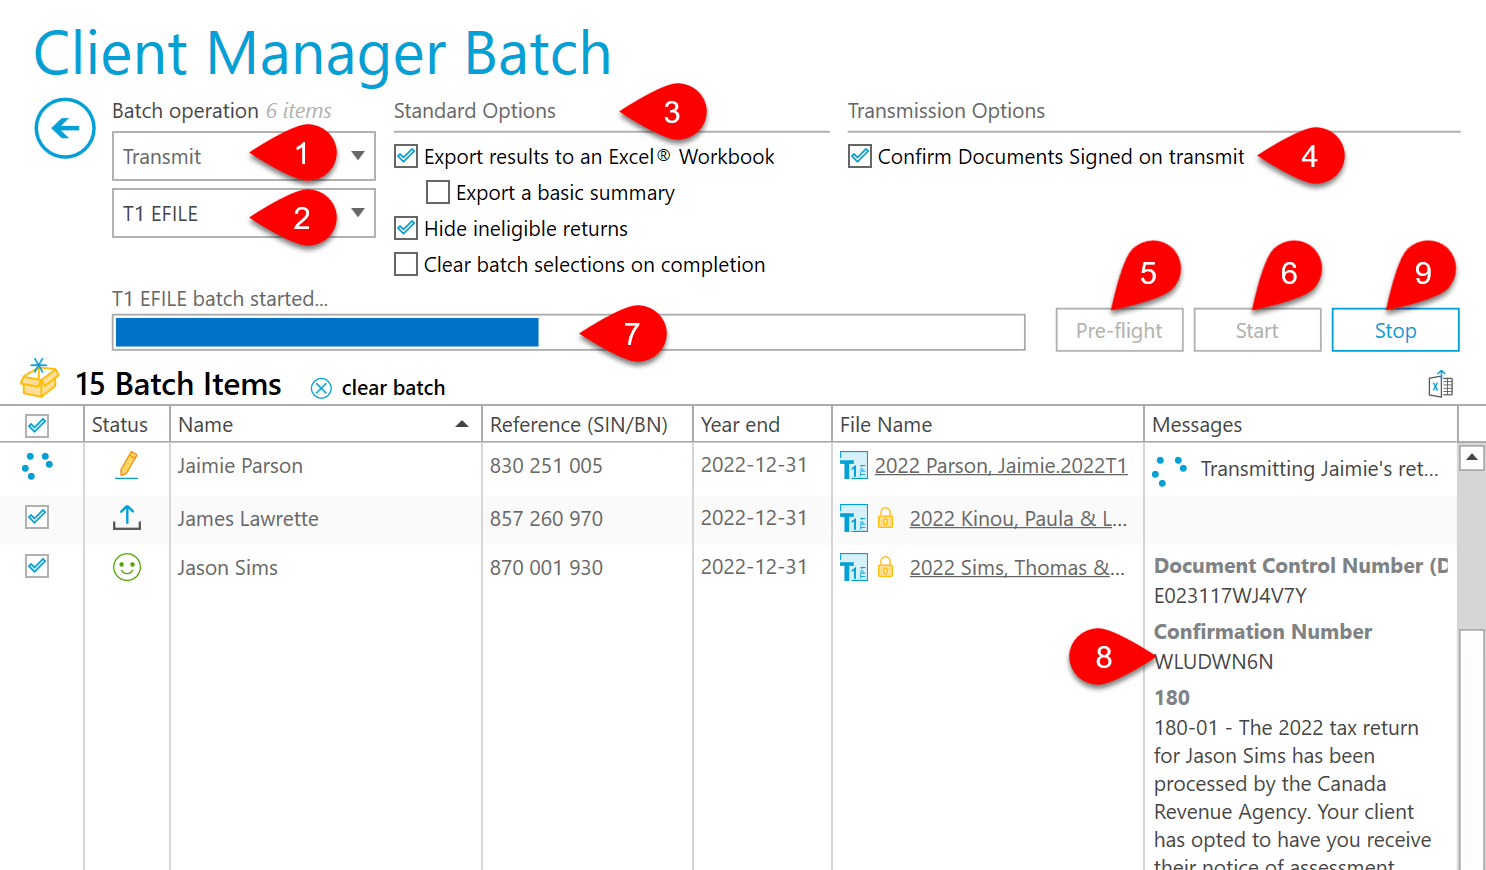 Screen Capture: Client Manager Batch